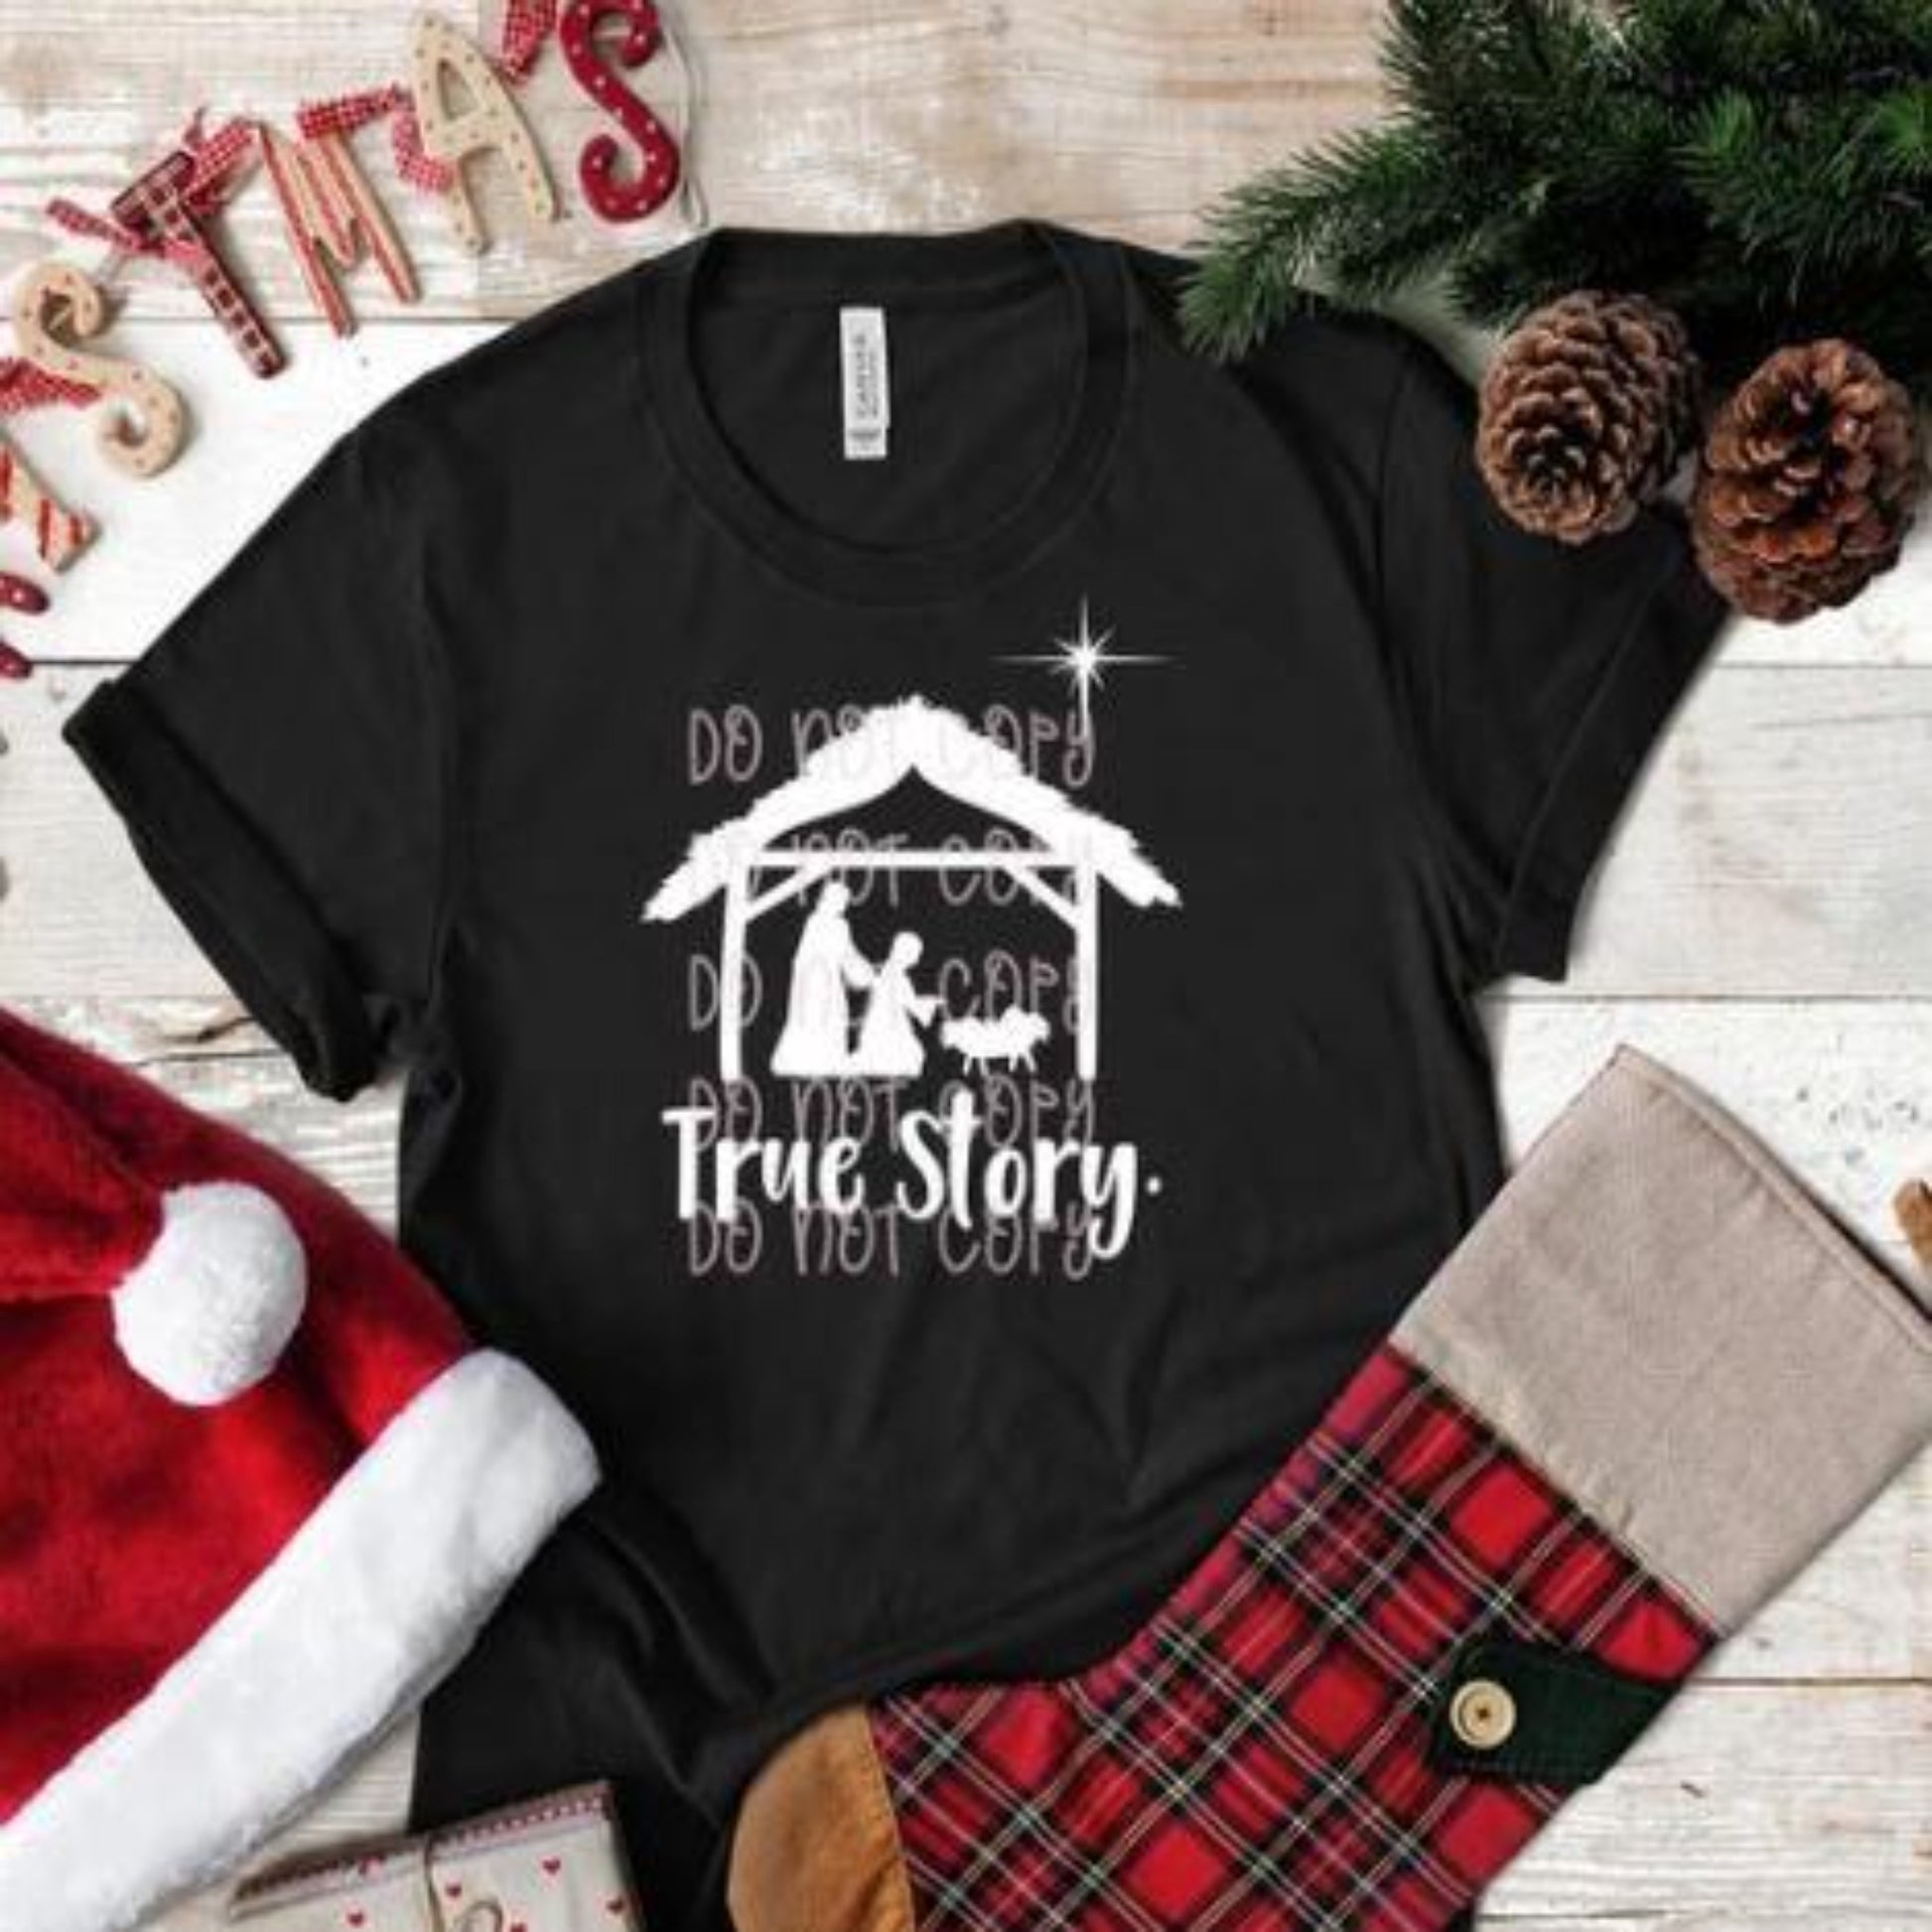 true_story specialty tee best_Christmas shirt Holiday tshirt seasons_wear comfortable_wear